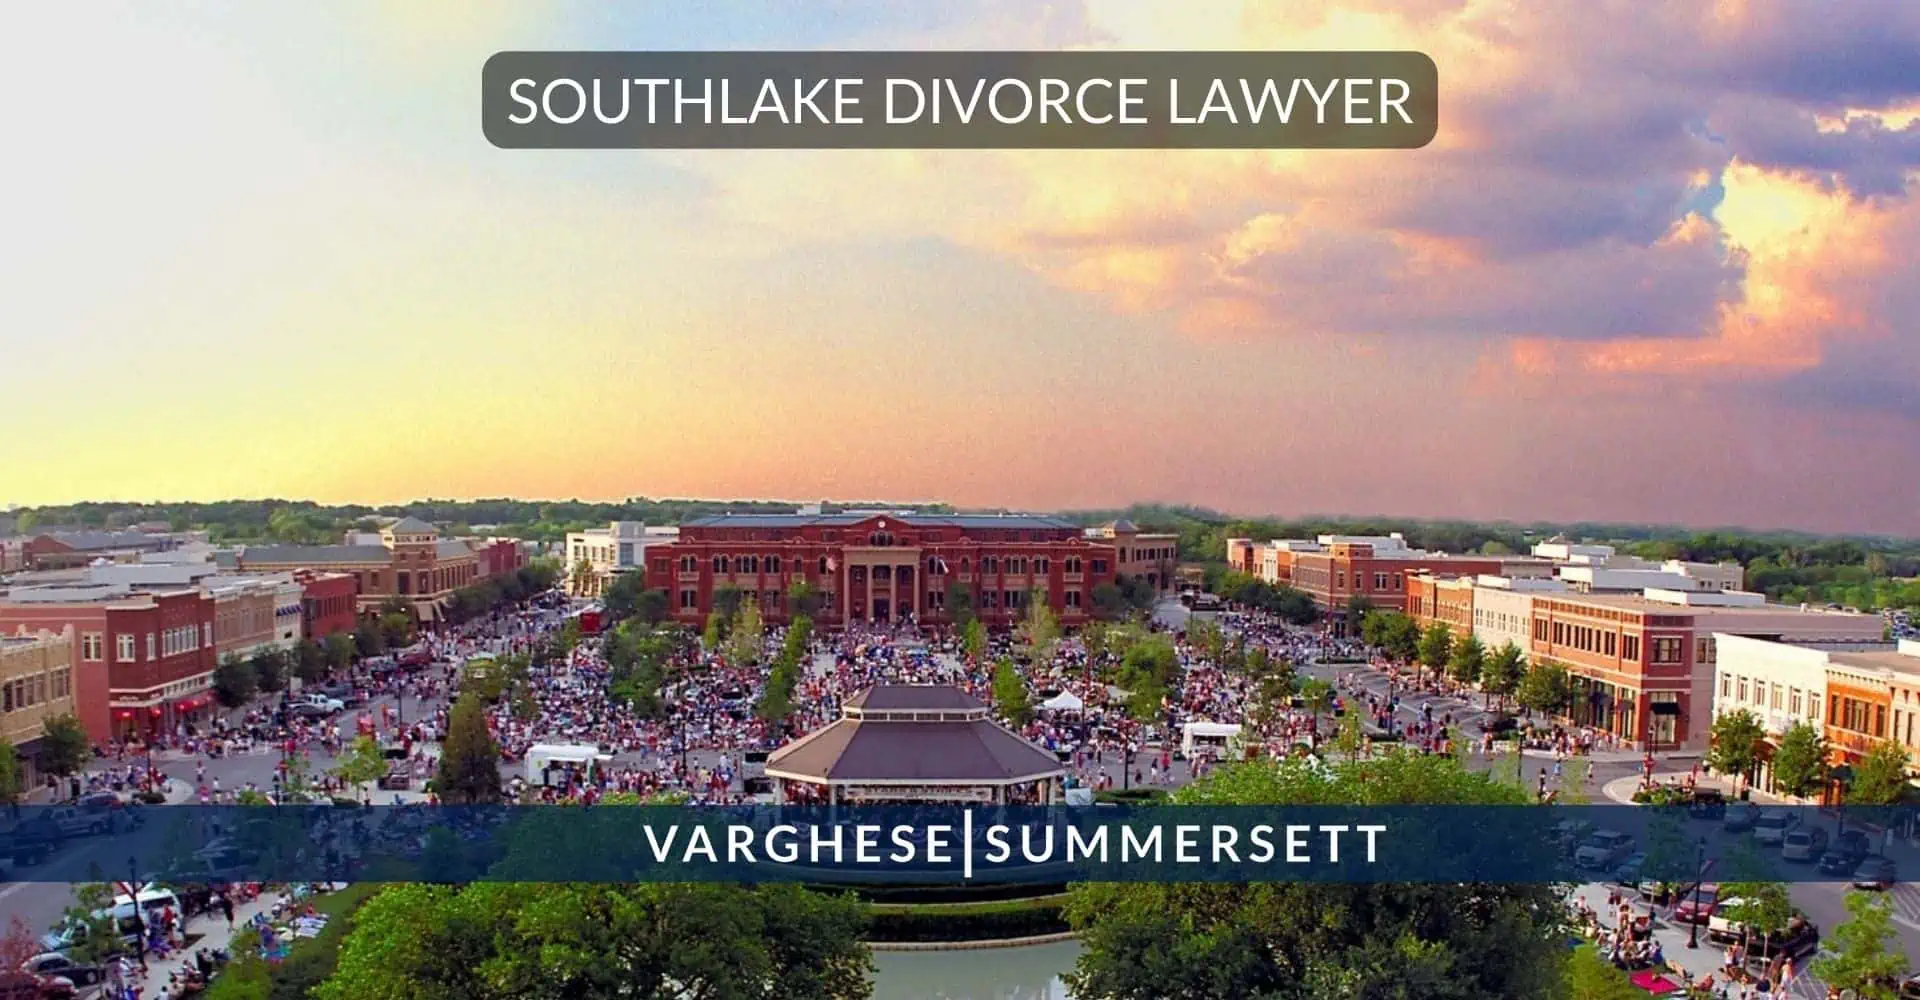 southlake divorce attorney